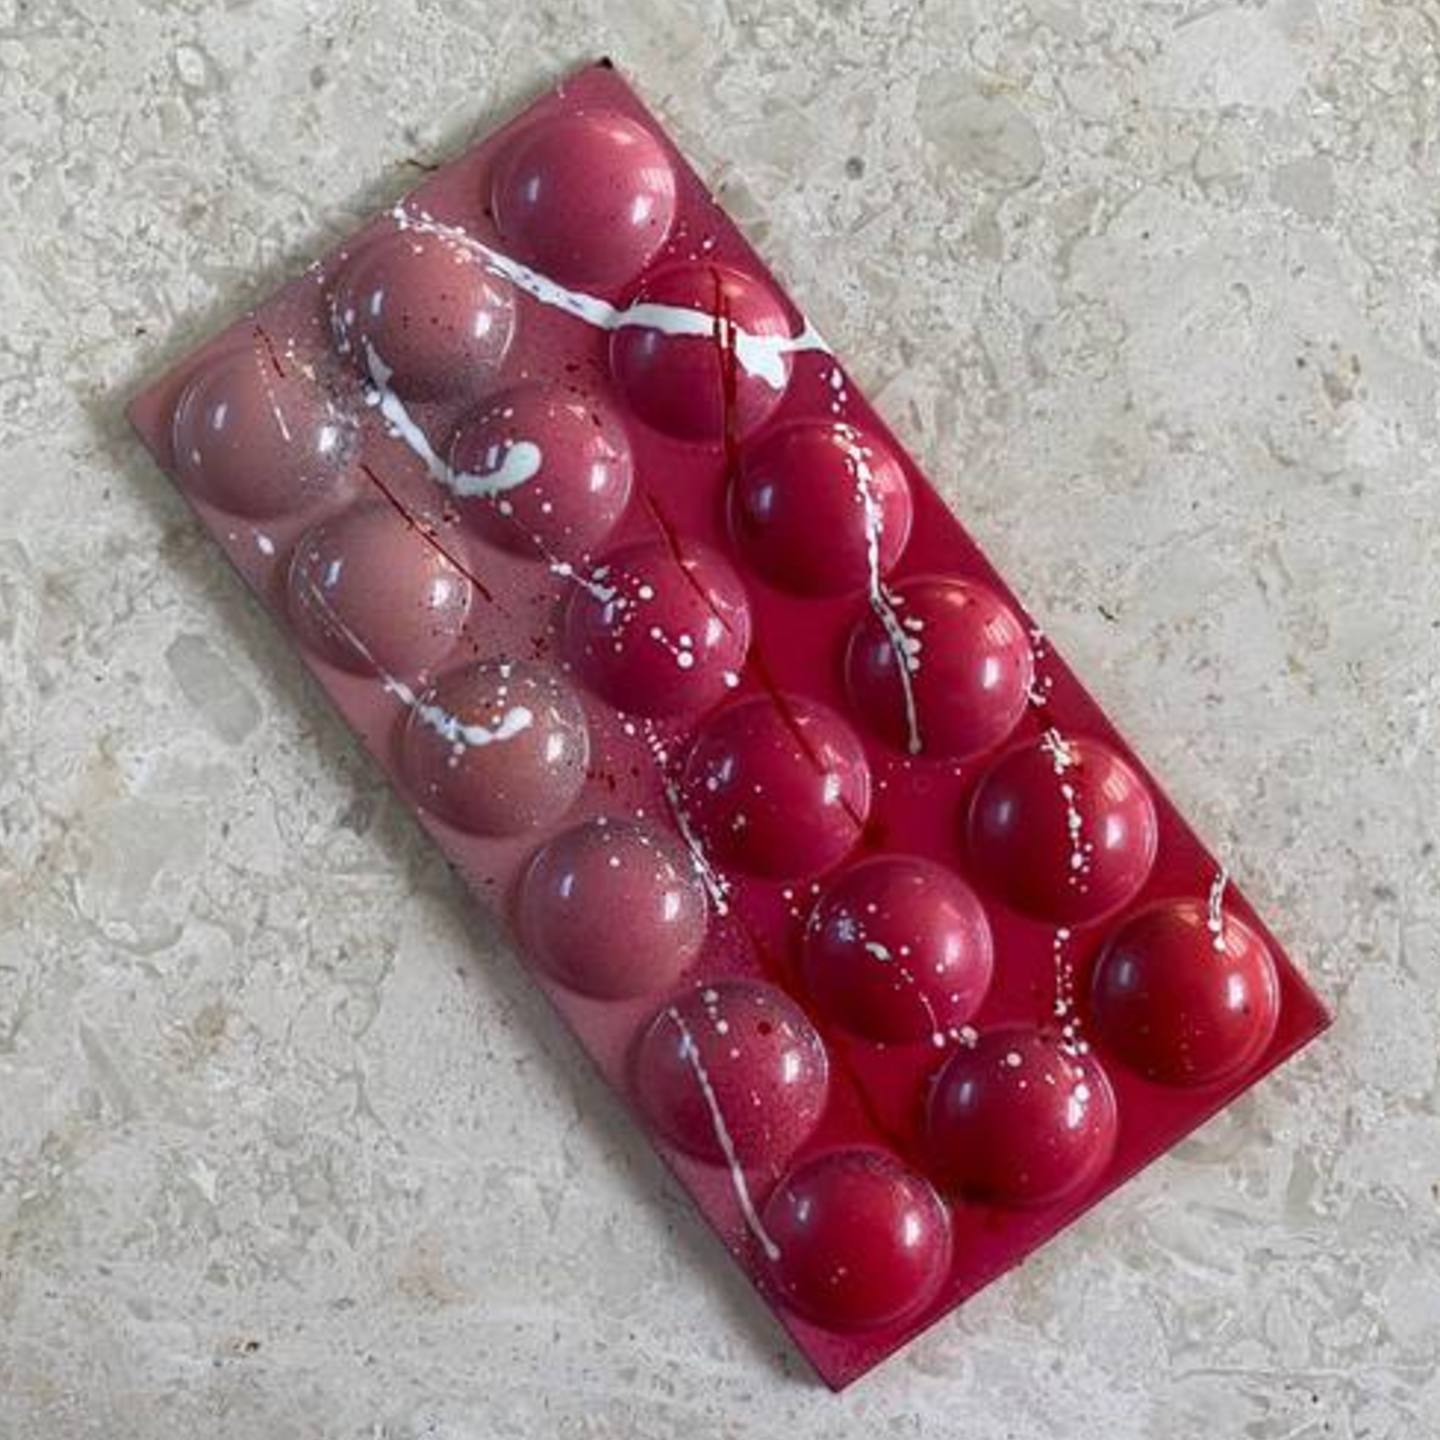 Raspberry chocolate bars